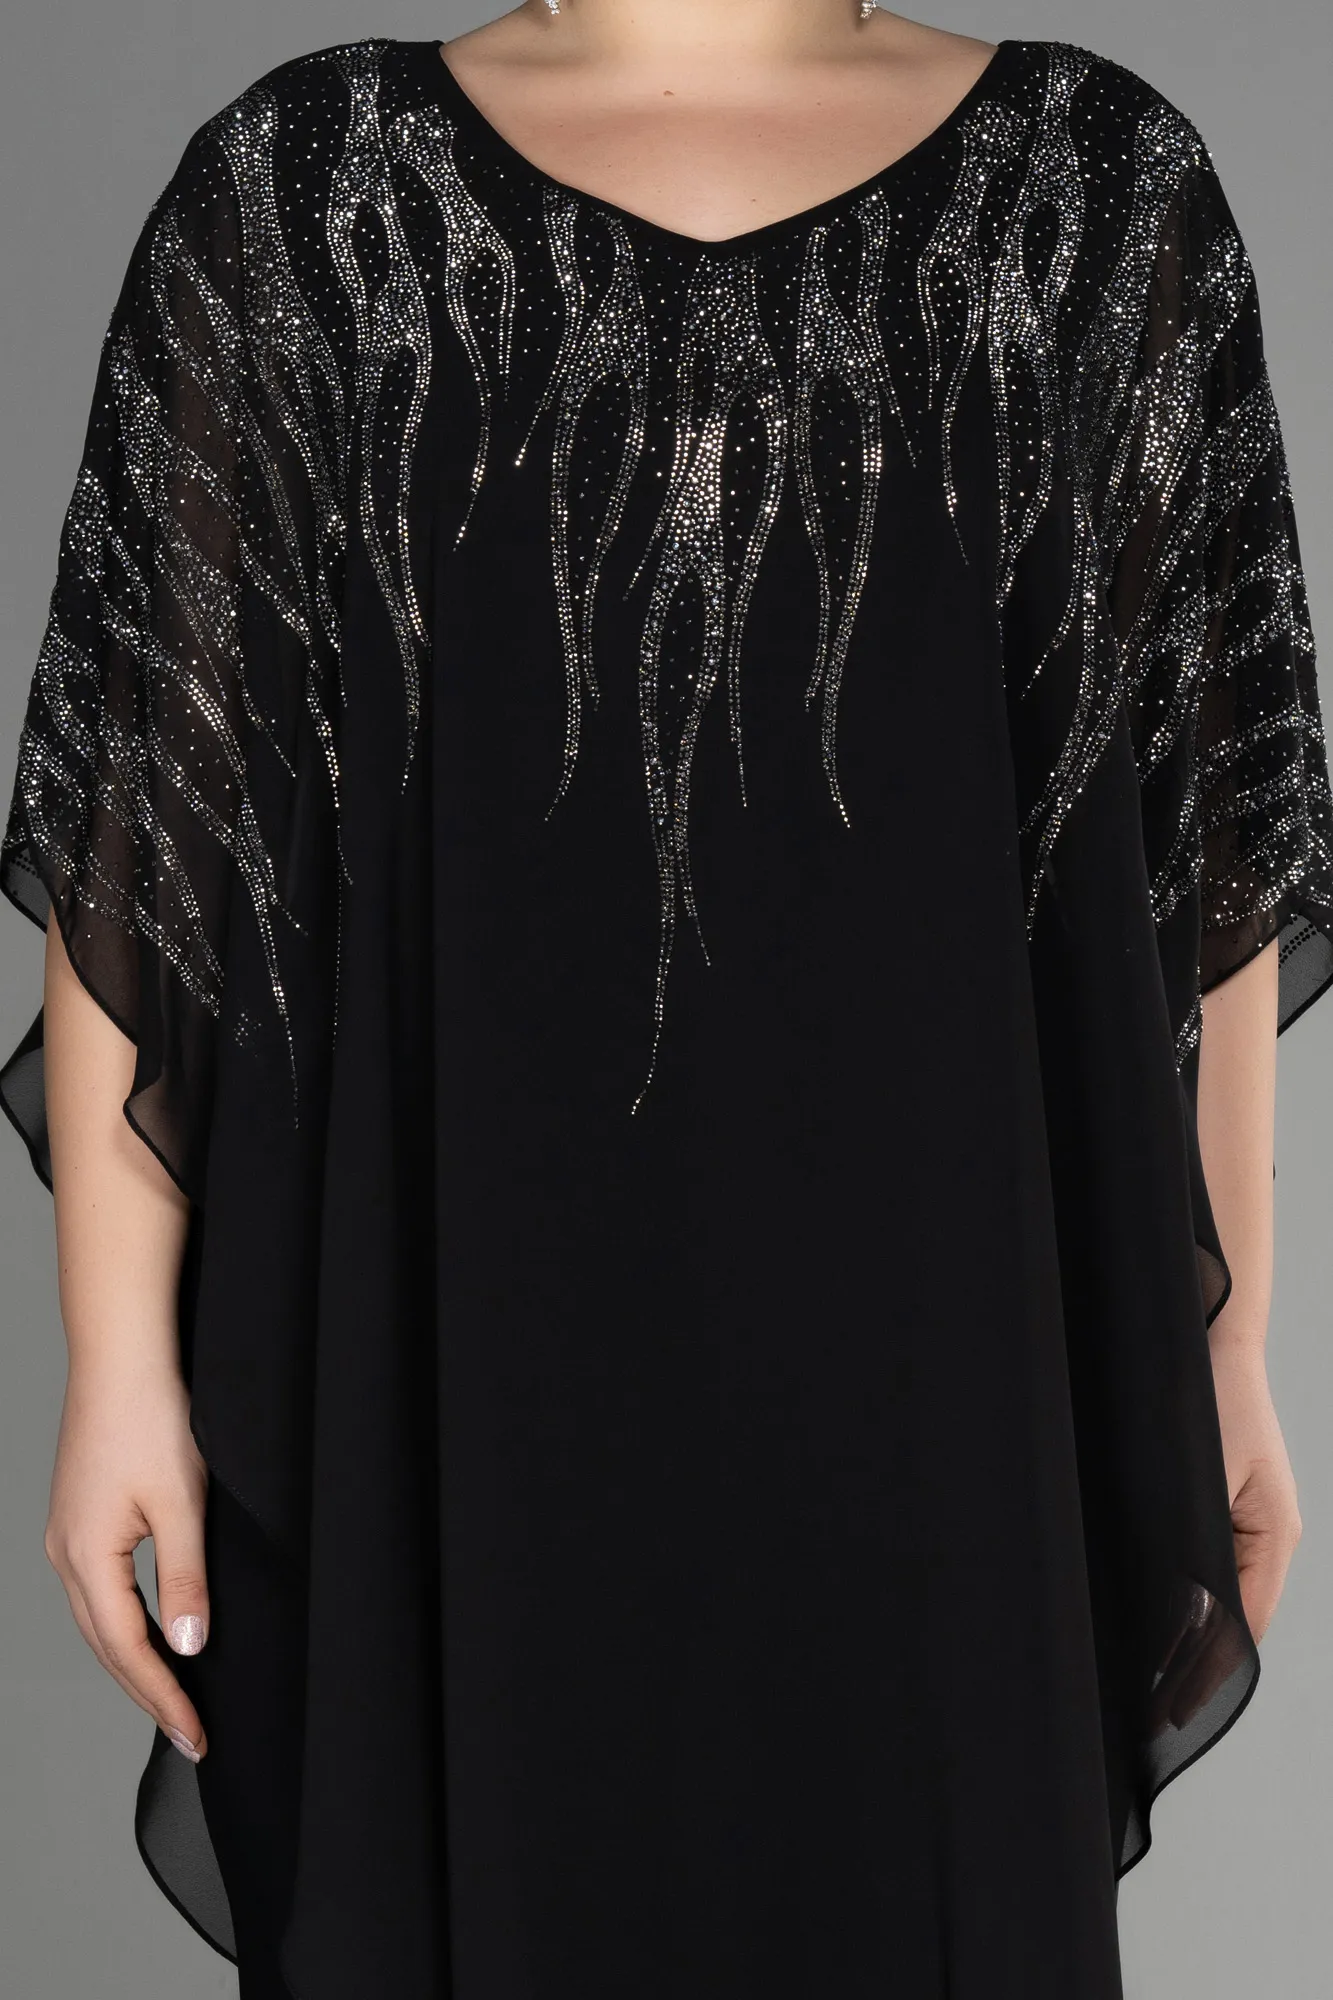 Black-Chiffon Plus Size Evening Dress ABT111